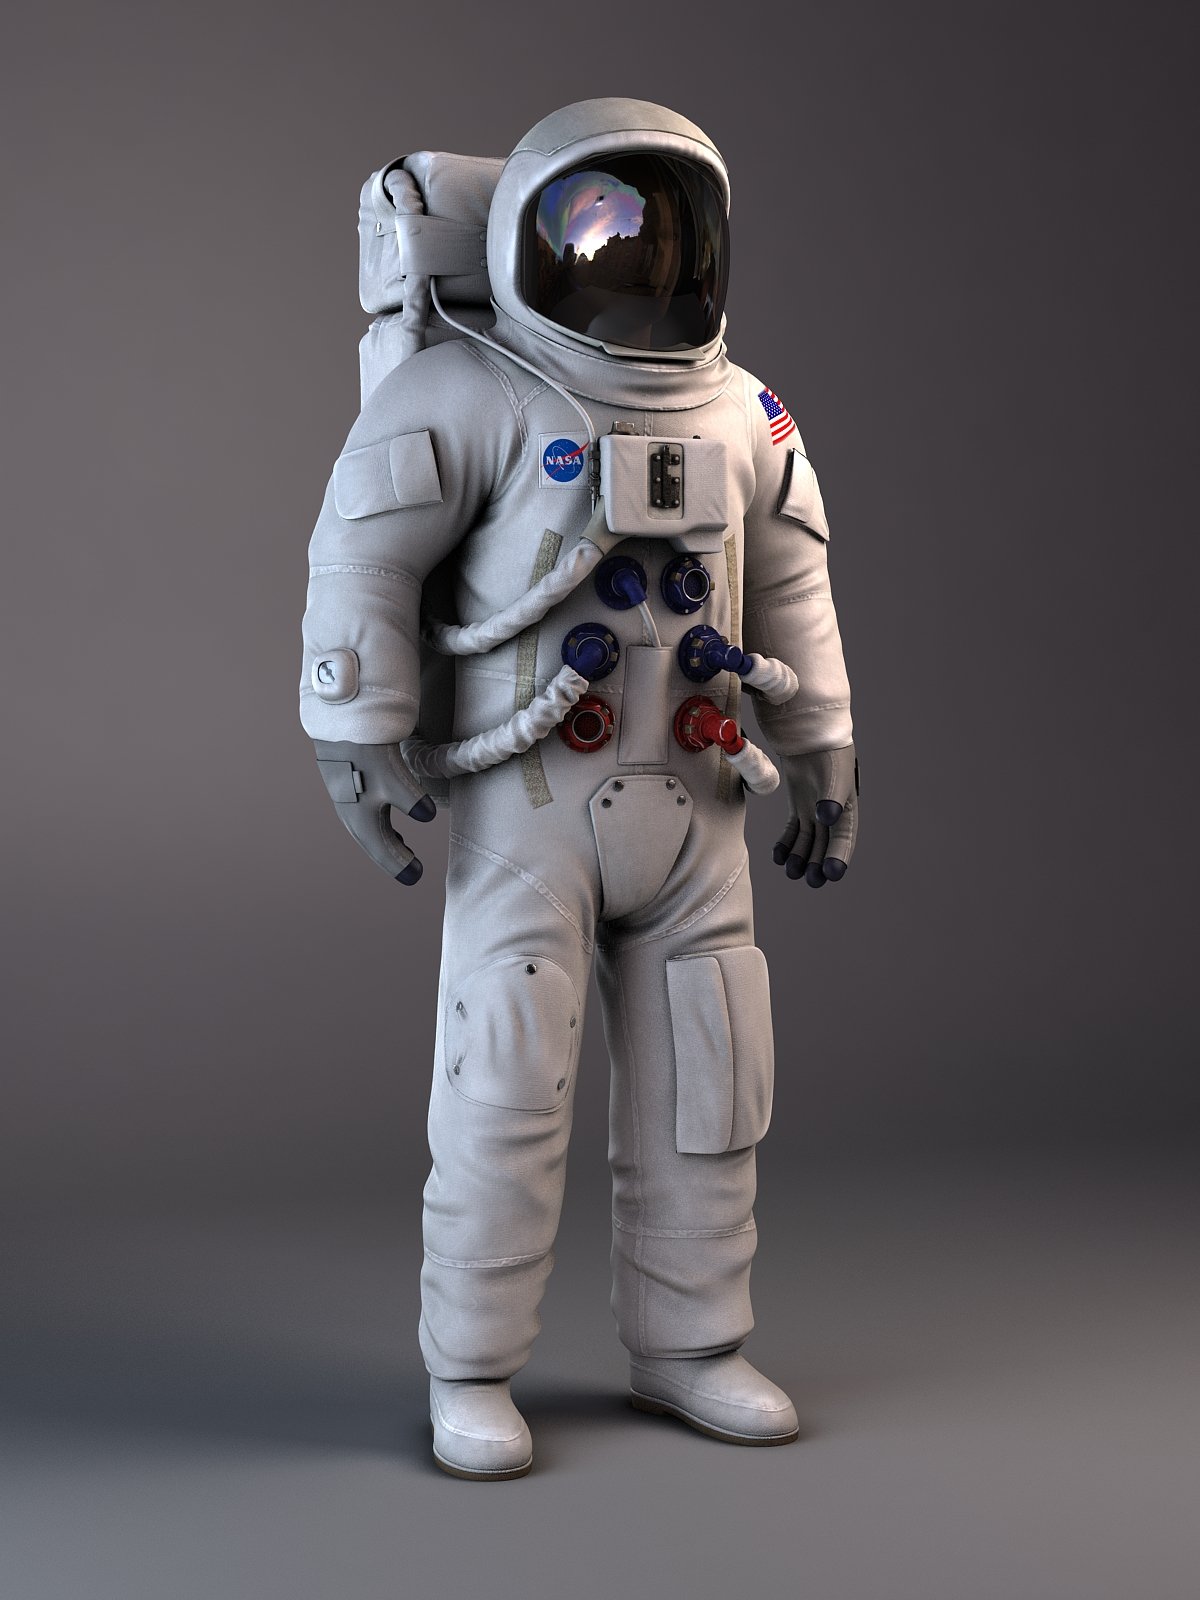 Шарики скафандр мод 4. Аполлон 11 3d model. Скафандр астронавта НАСА. Костюмы астронавтов Аполлон 11. Костюм Космонавта НАСА.